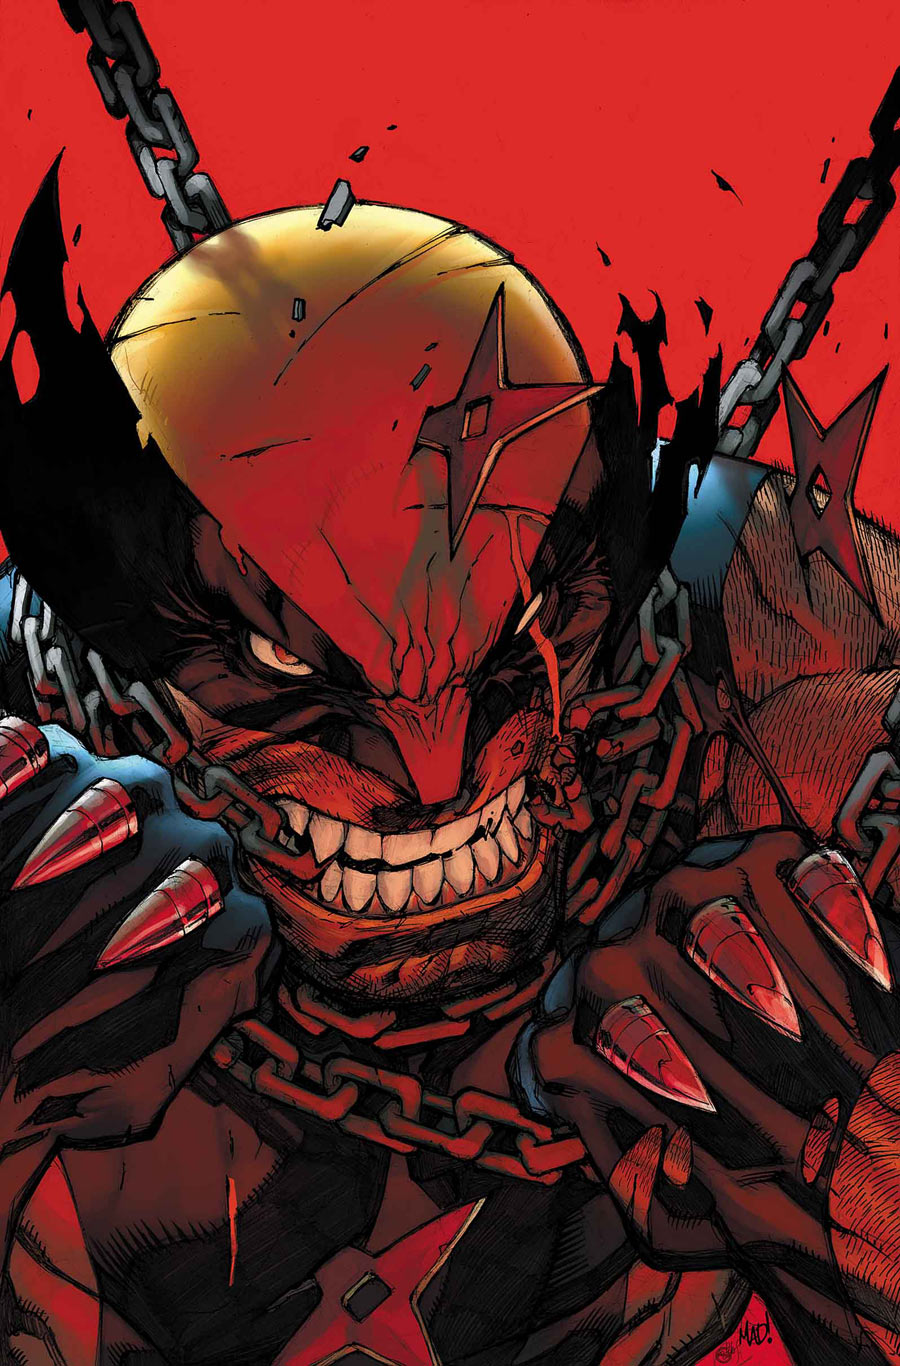 Savage Wolverine #16